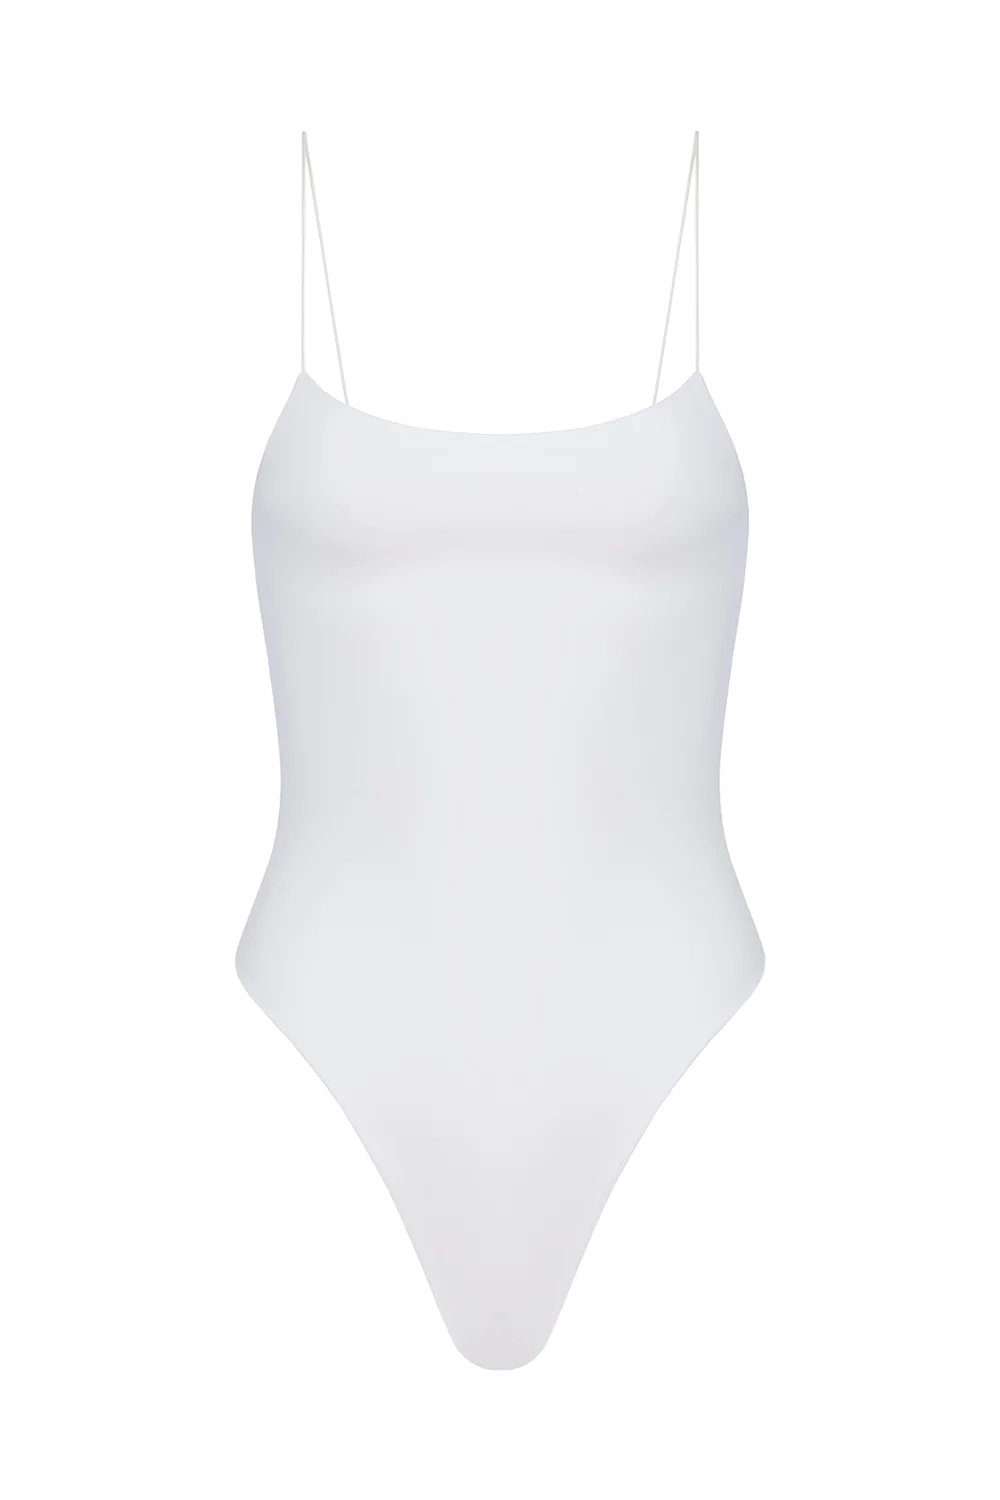 The Eco C White Swimsuit